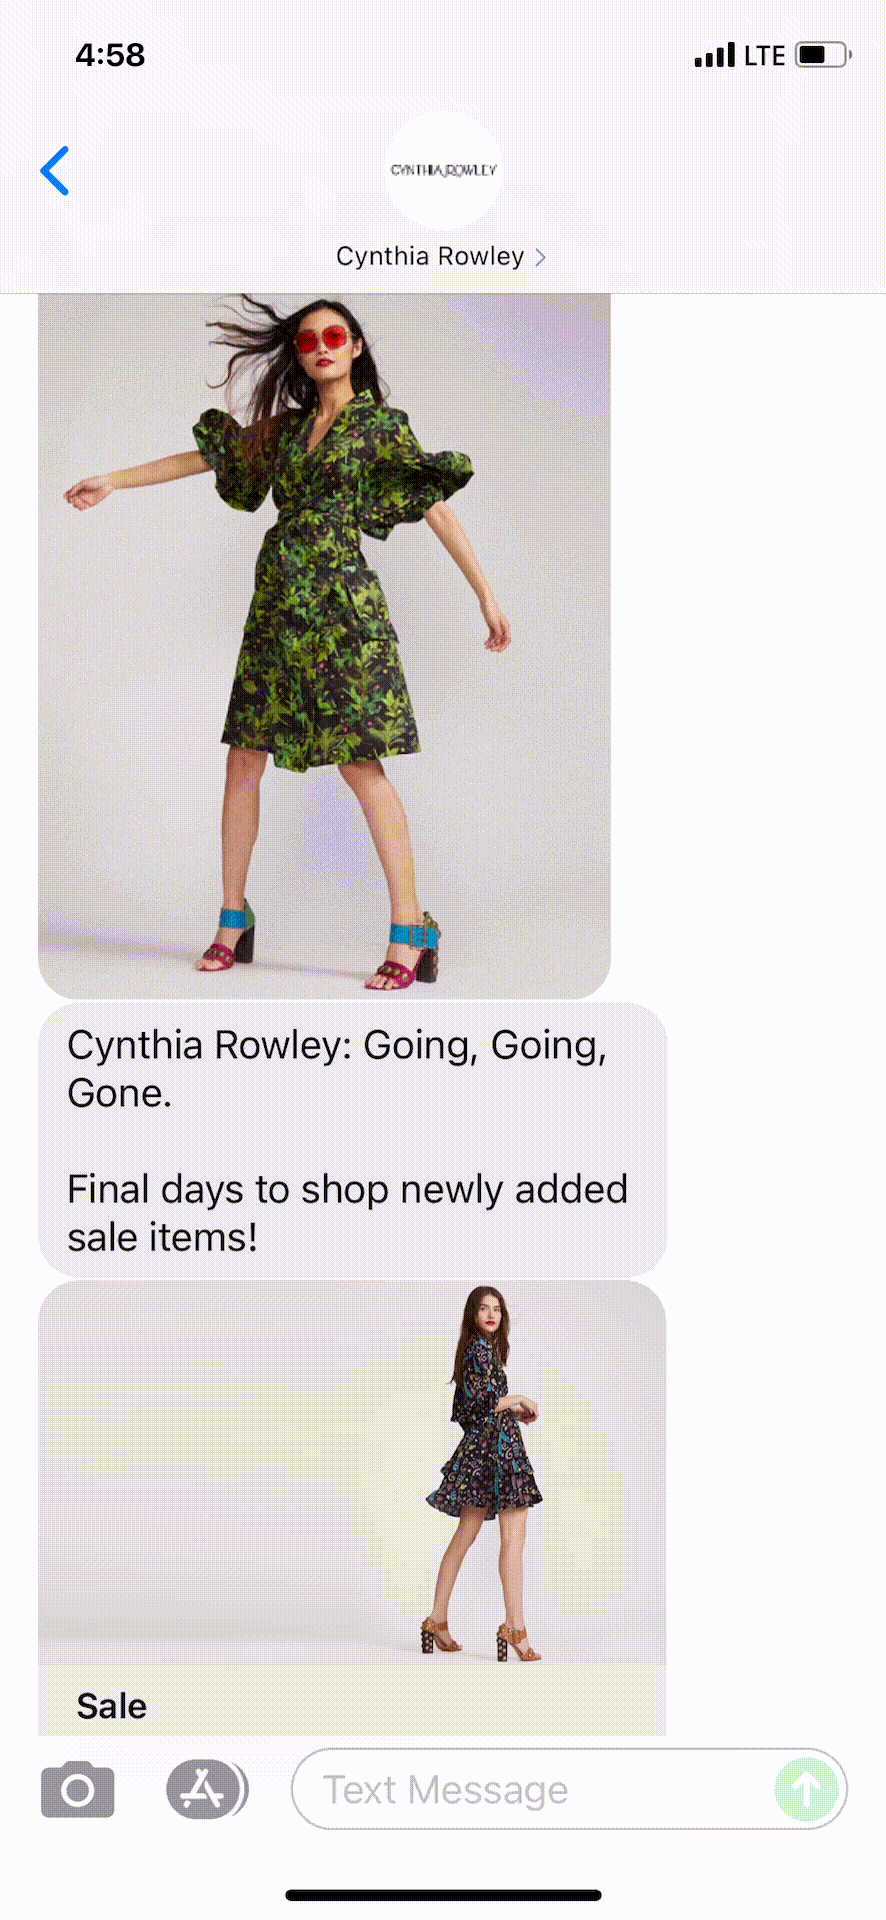 Cynthia-Rowley-Text-Message-Marketing-Example-08.28.2021